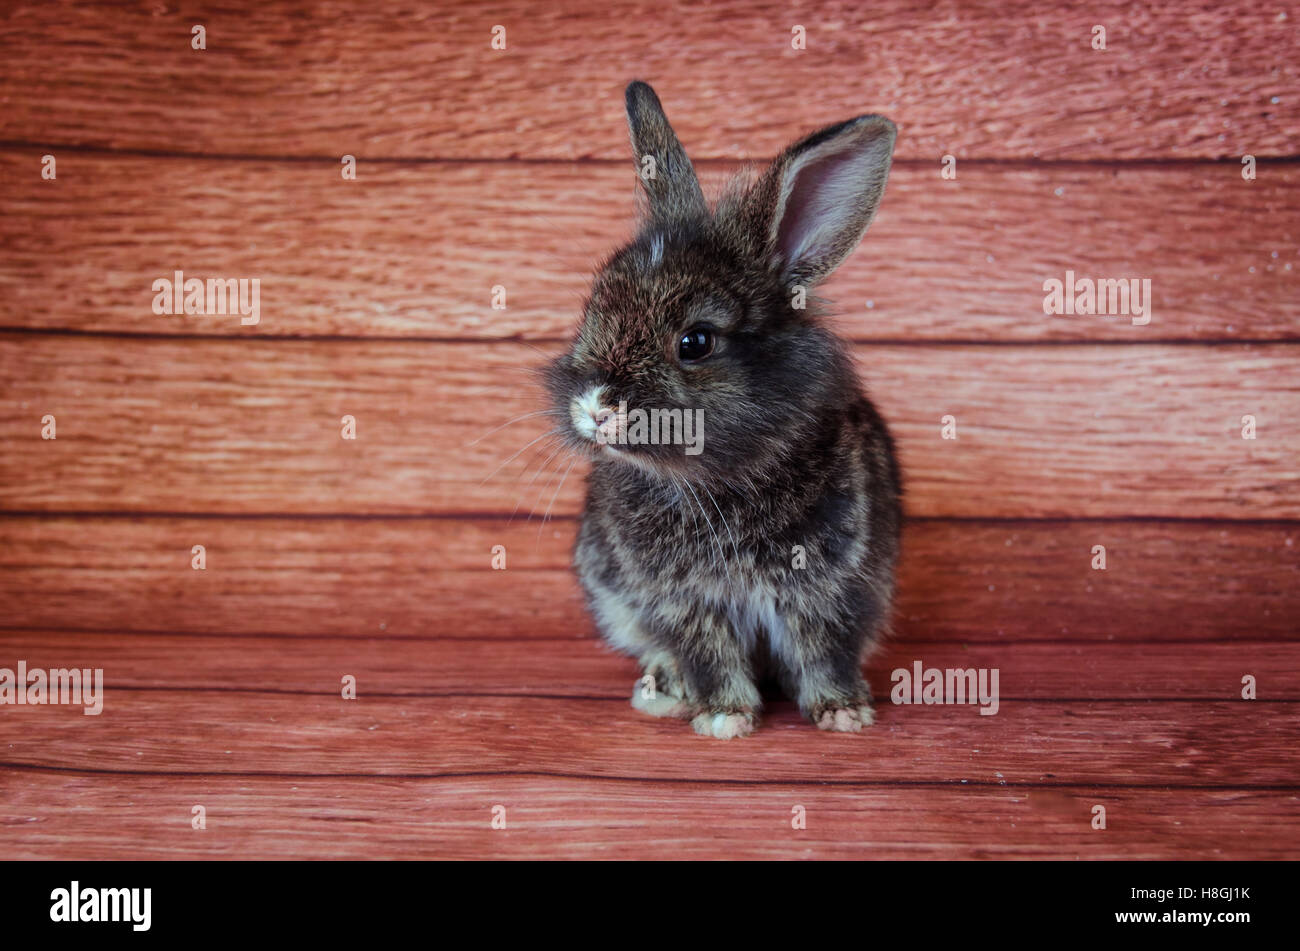 adorable little rabbit pet against wooden background Stock Photo